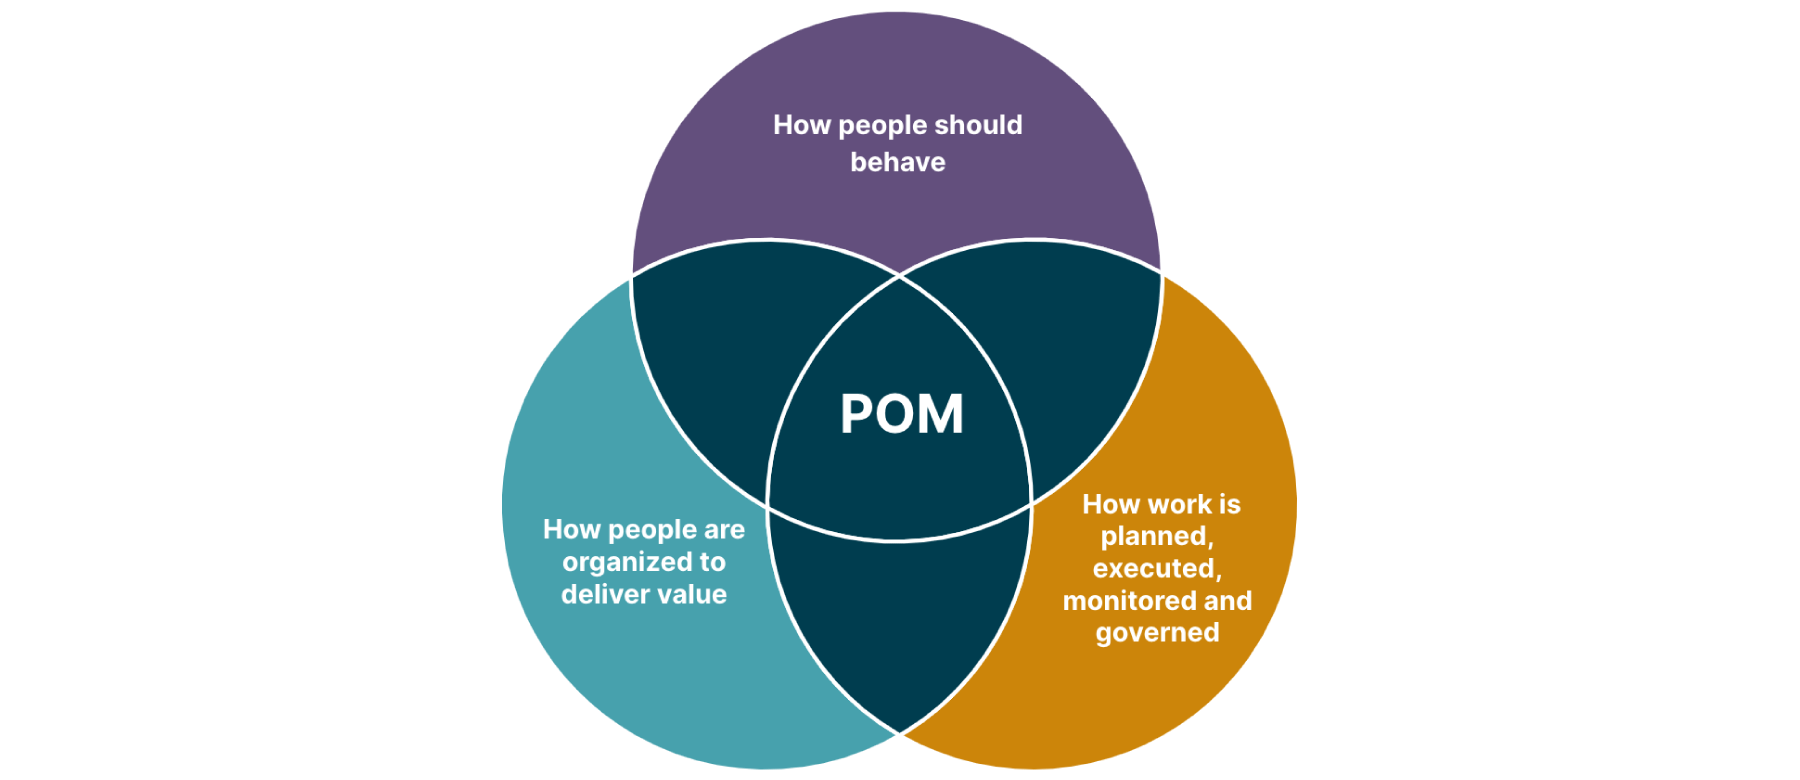 The POM covers three key areas